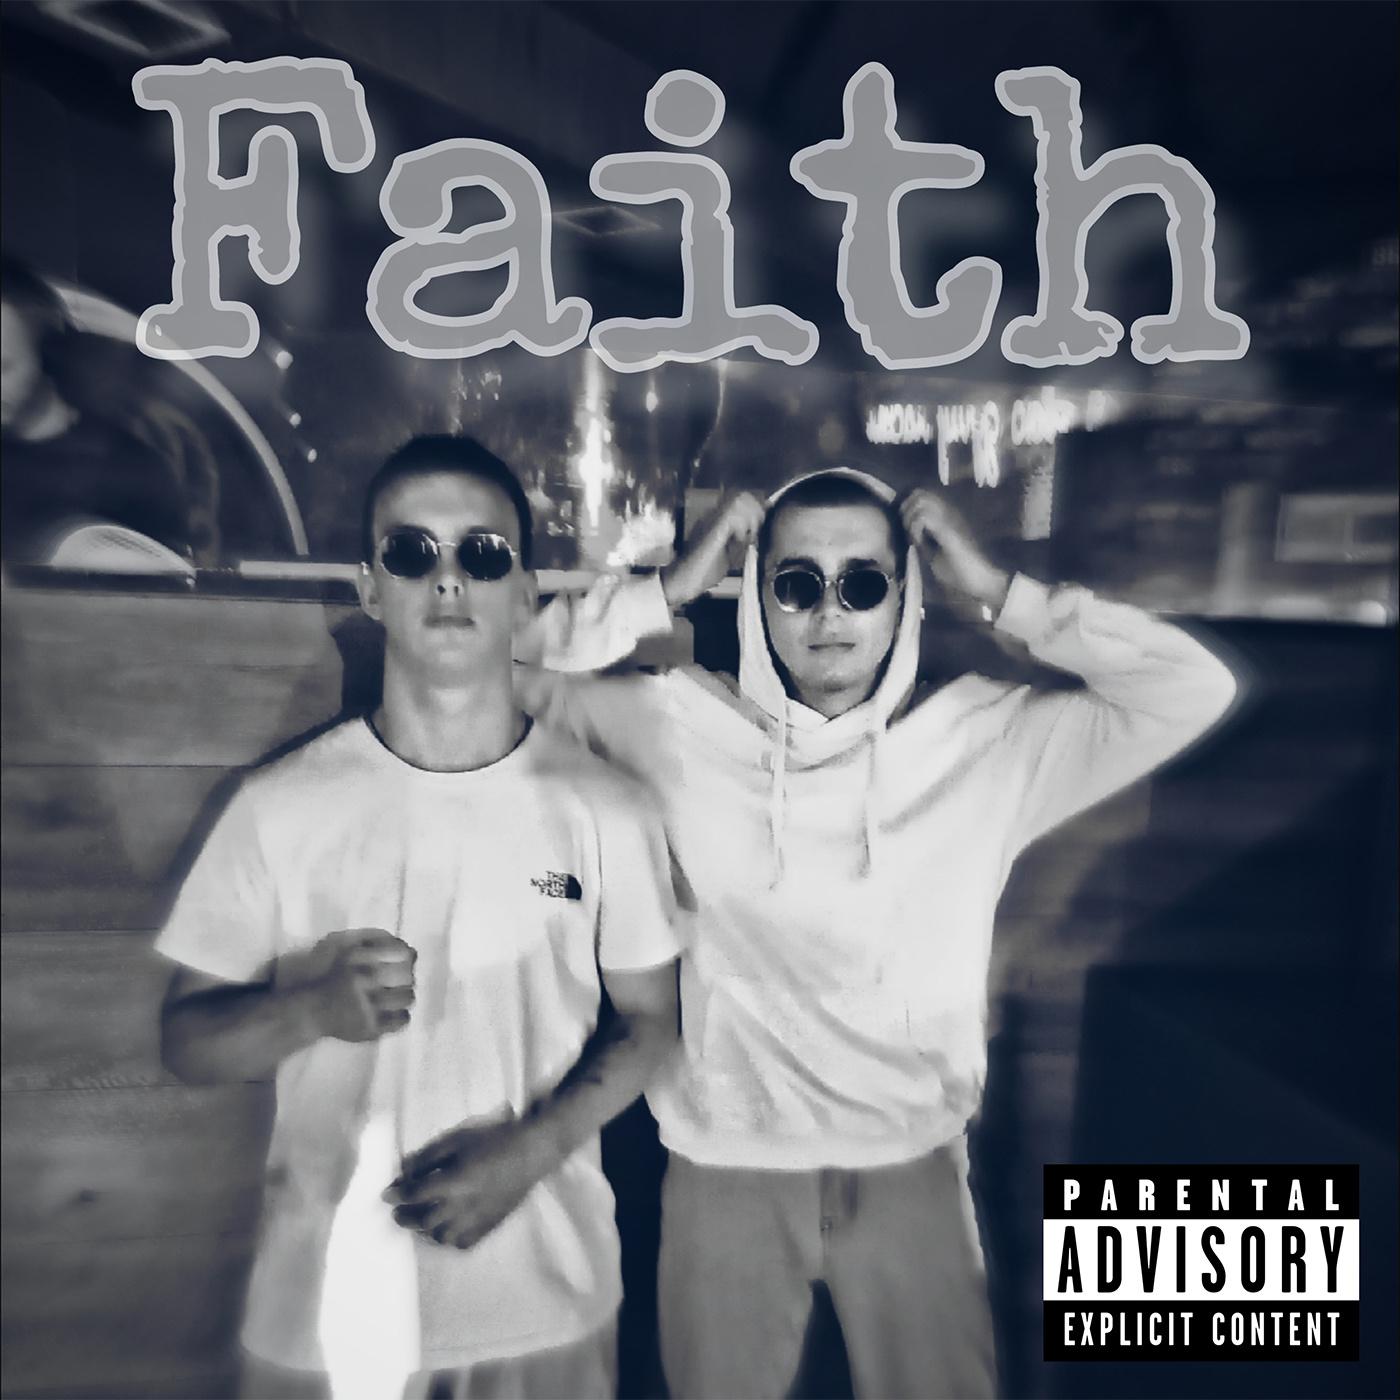 Постер альбома FAITH